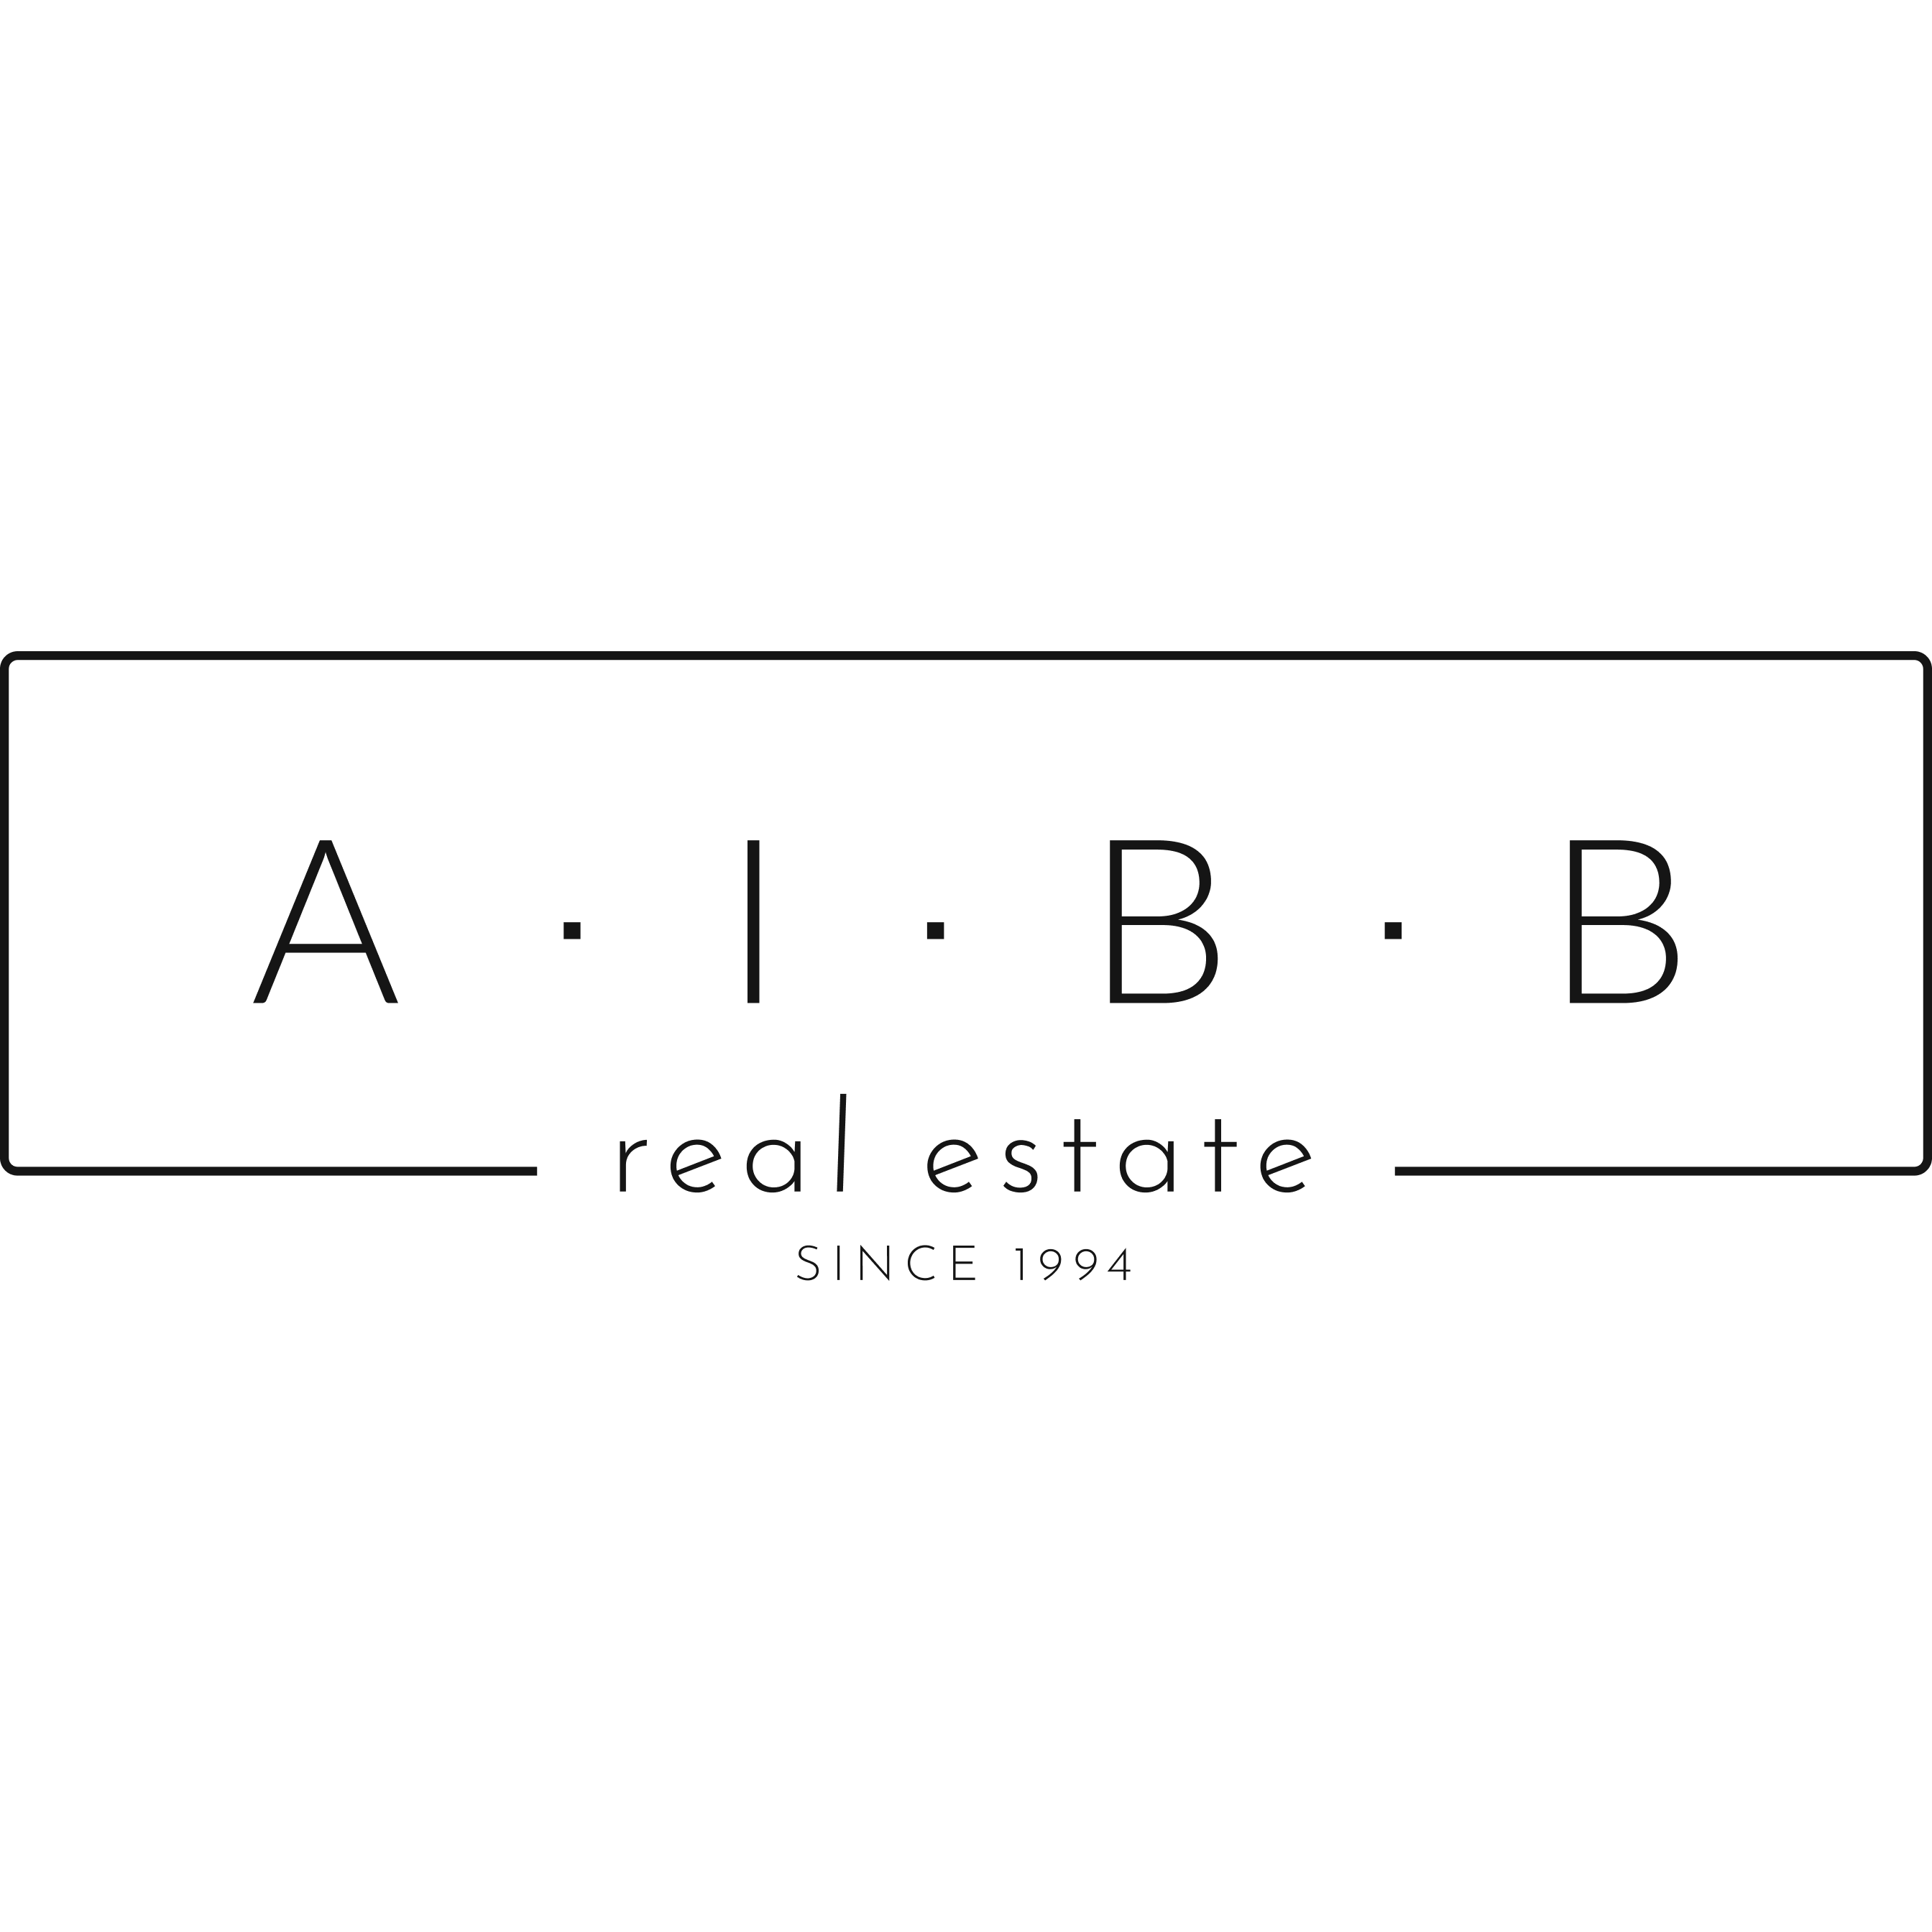 A.I.B.B. Real Estate